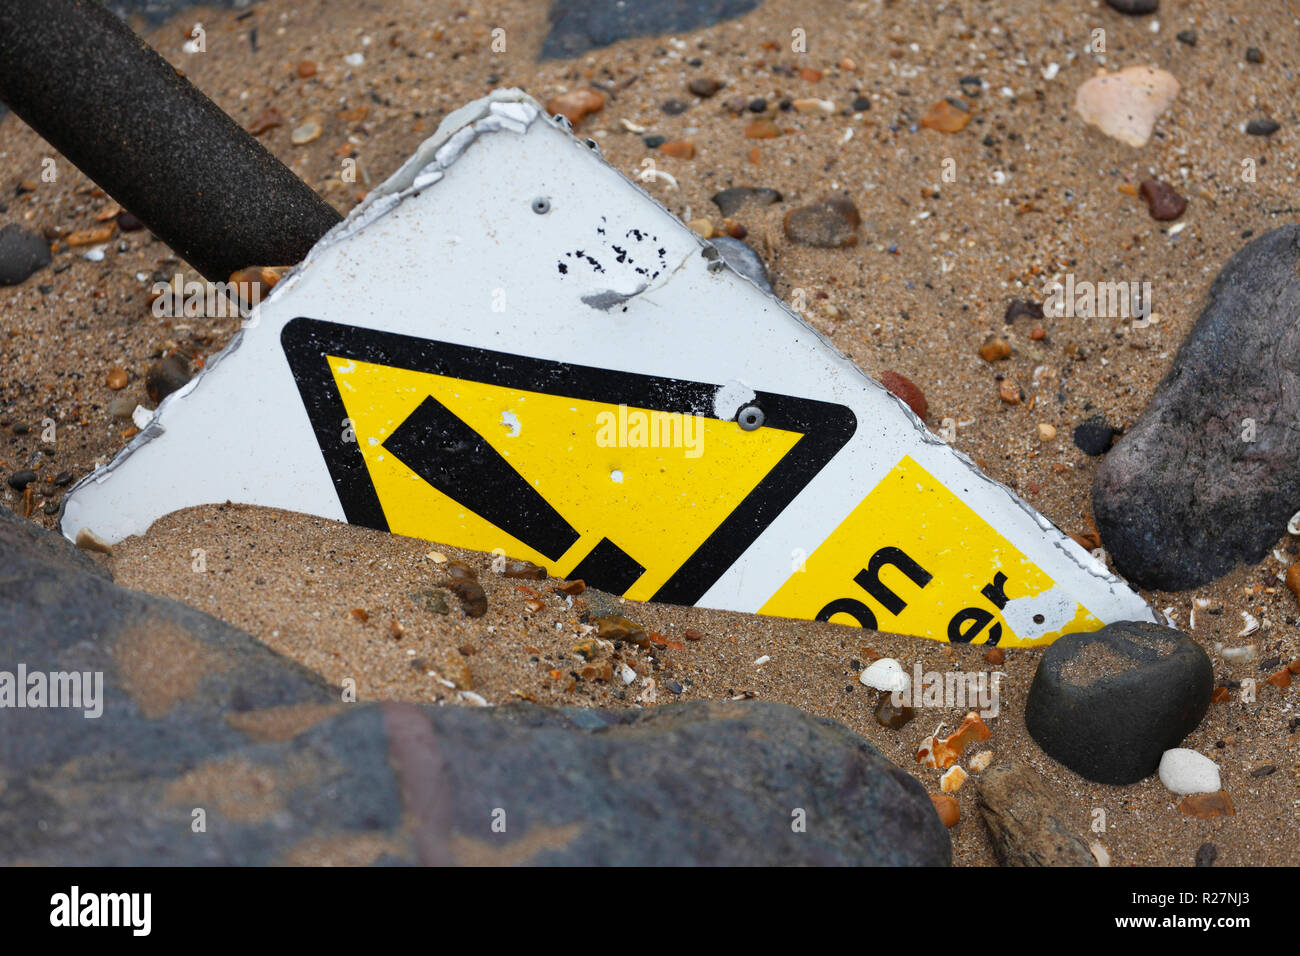 Danger warning sign half buried under sand. Stock Photo